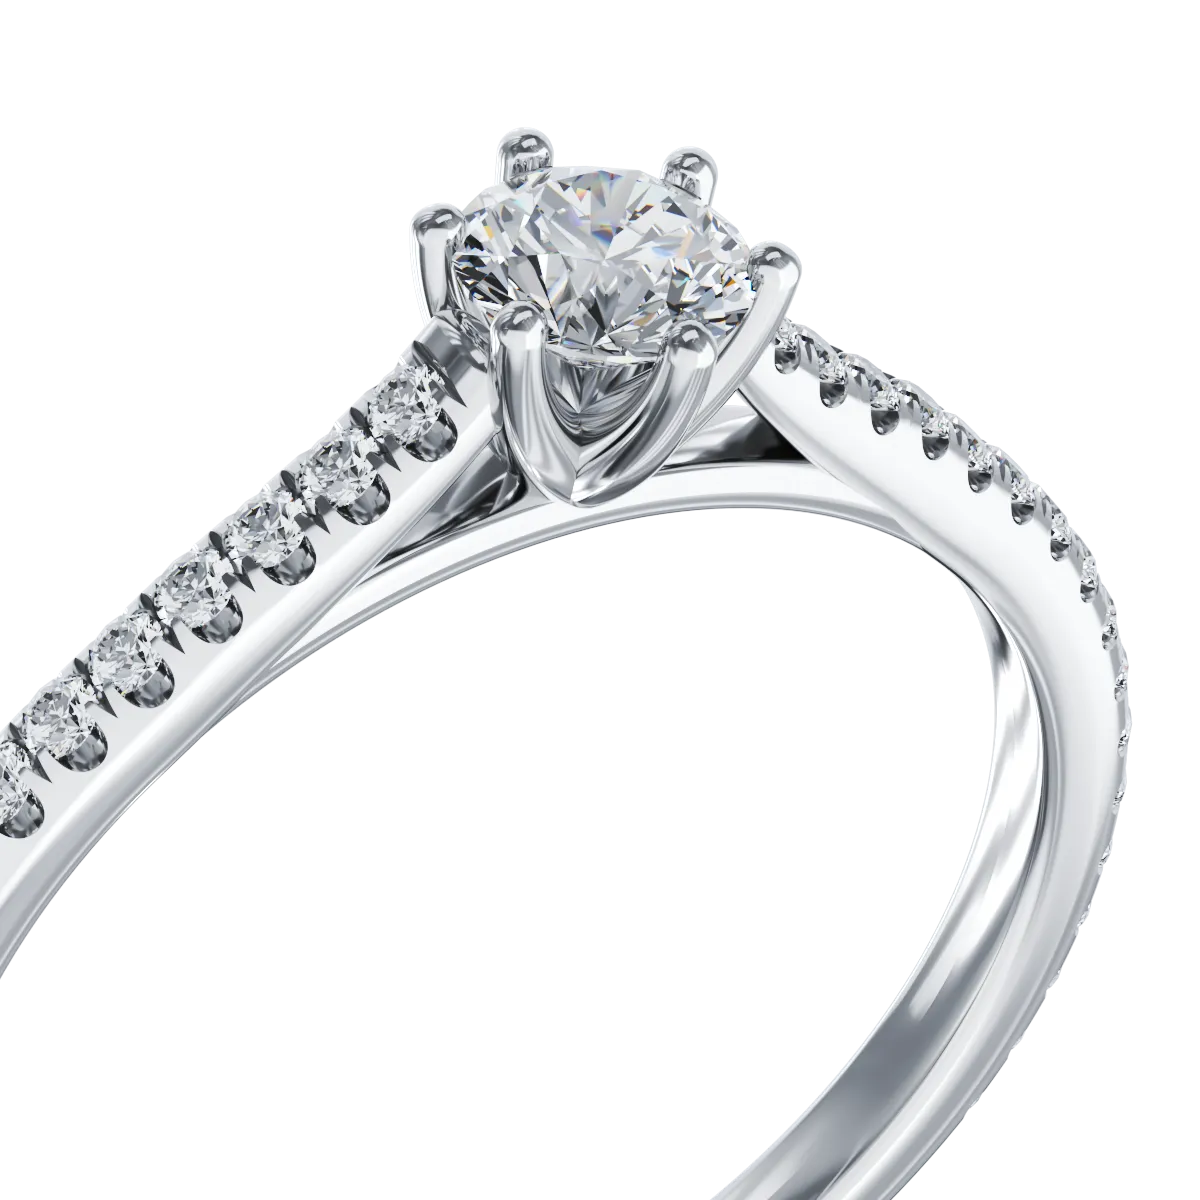 Platinum engagement ring with 0.19ct diamond and 0.18ct diamonds